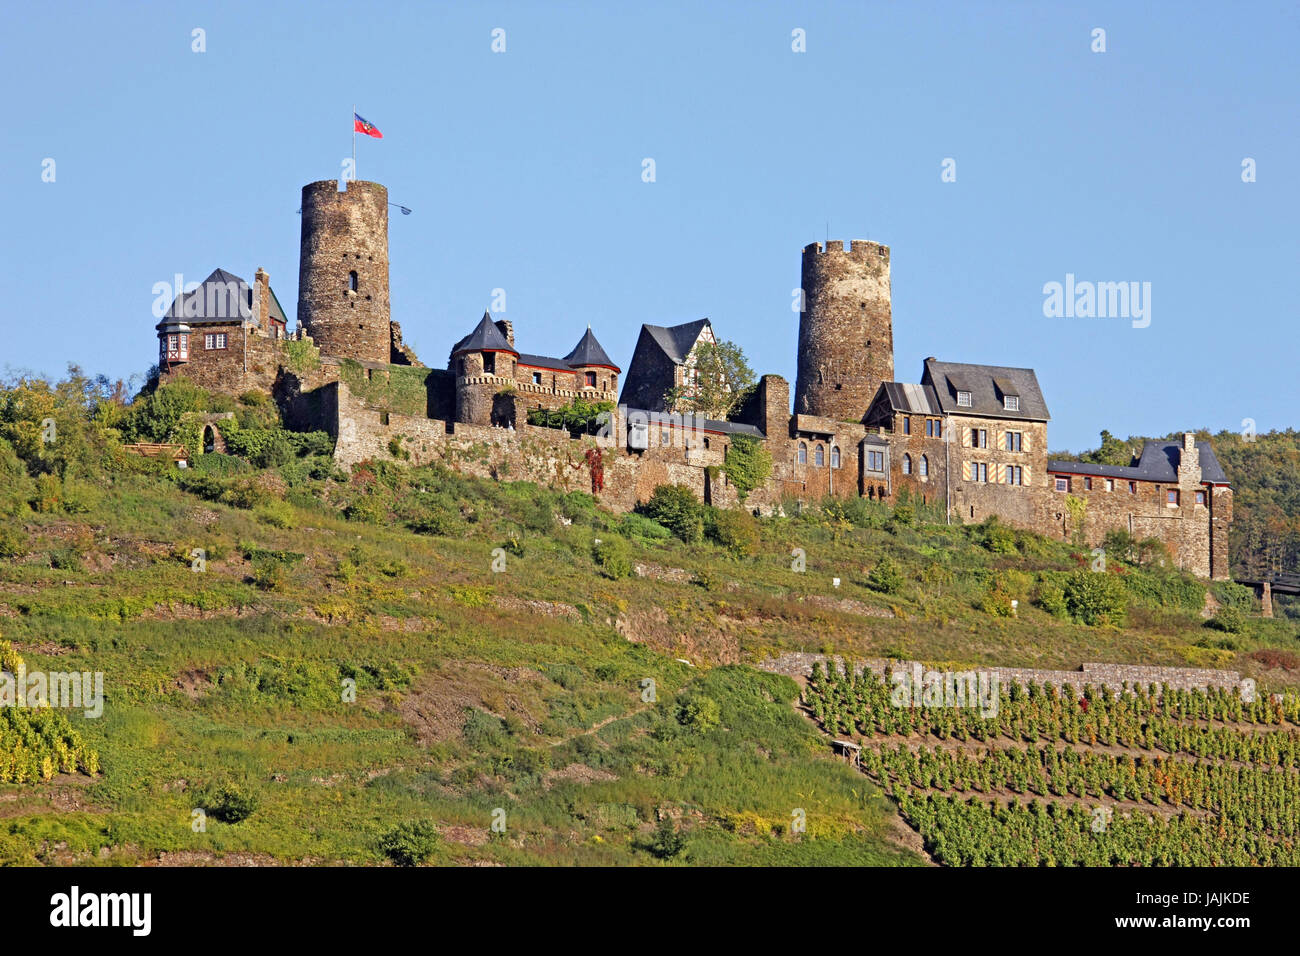 Germany,Rhineland-Palatinate,olefine,castle,outside,wine village,sky,blue,ruin,Middle Ages,towers, Stock Photo